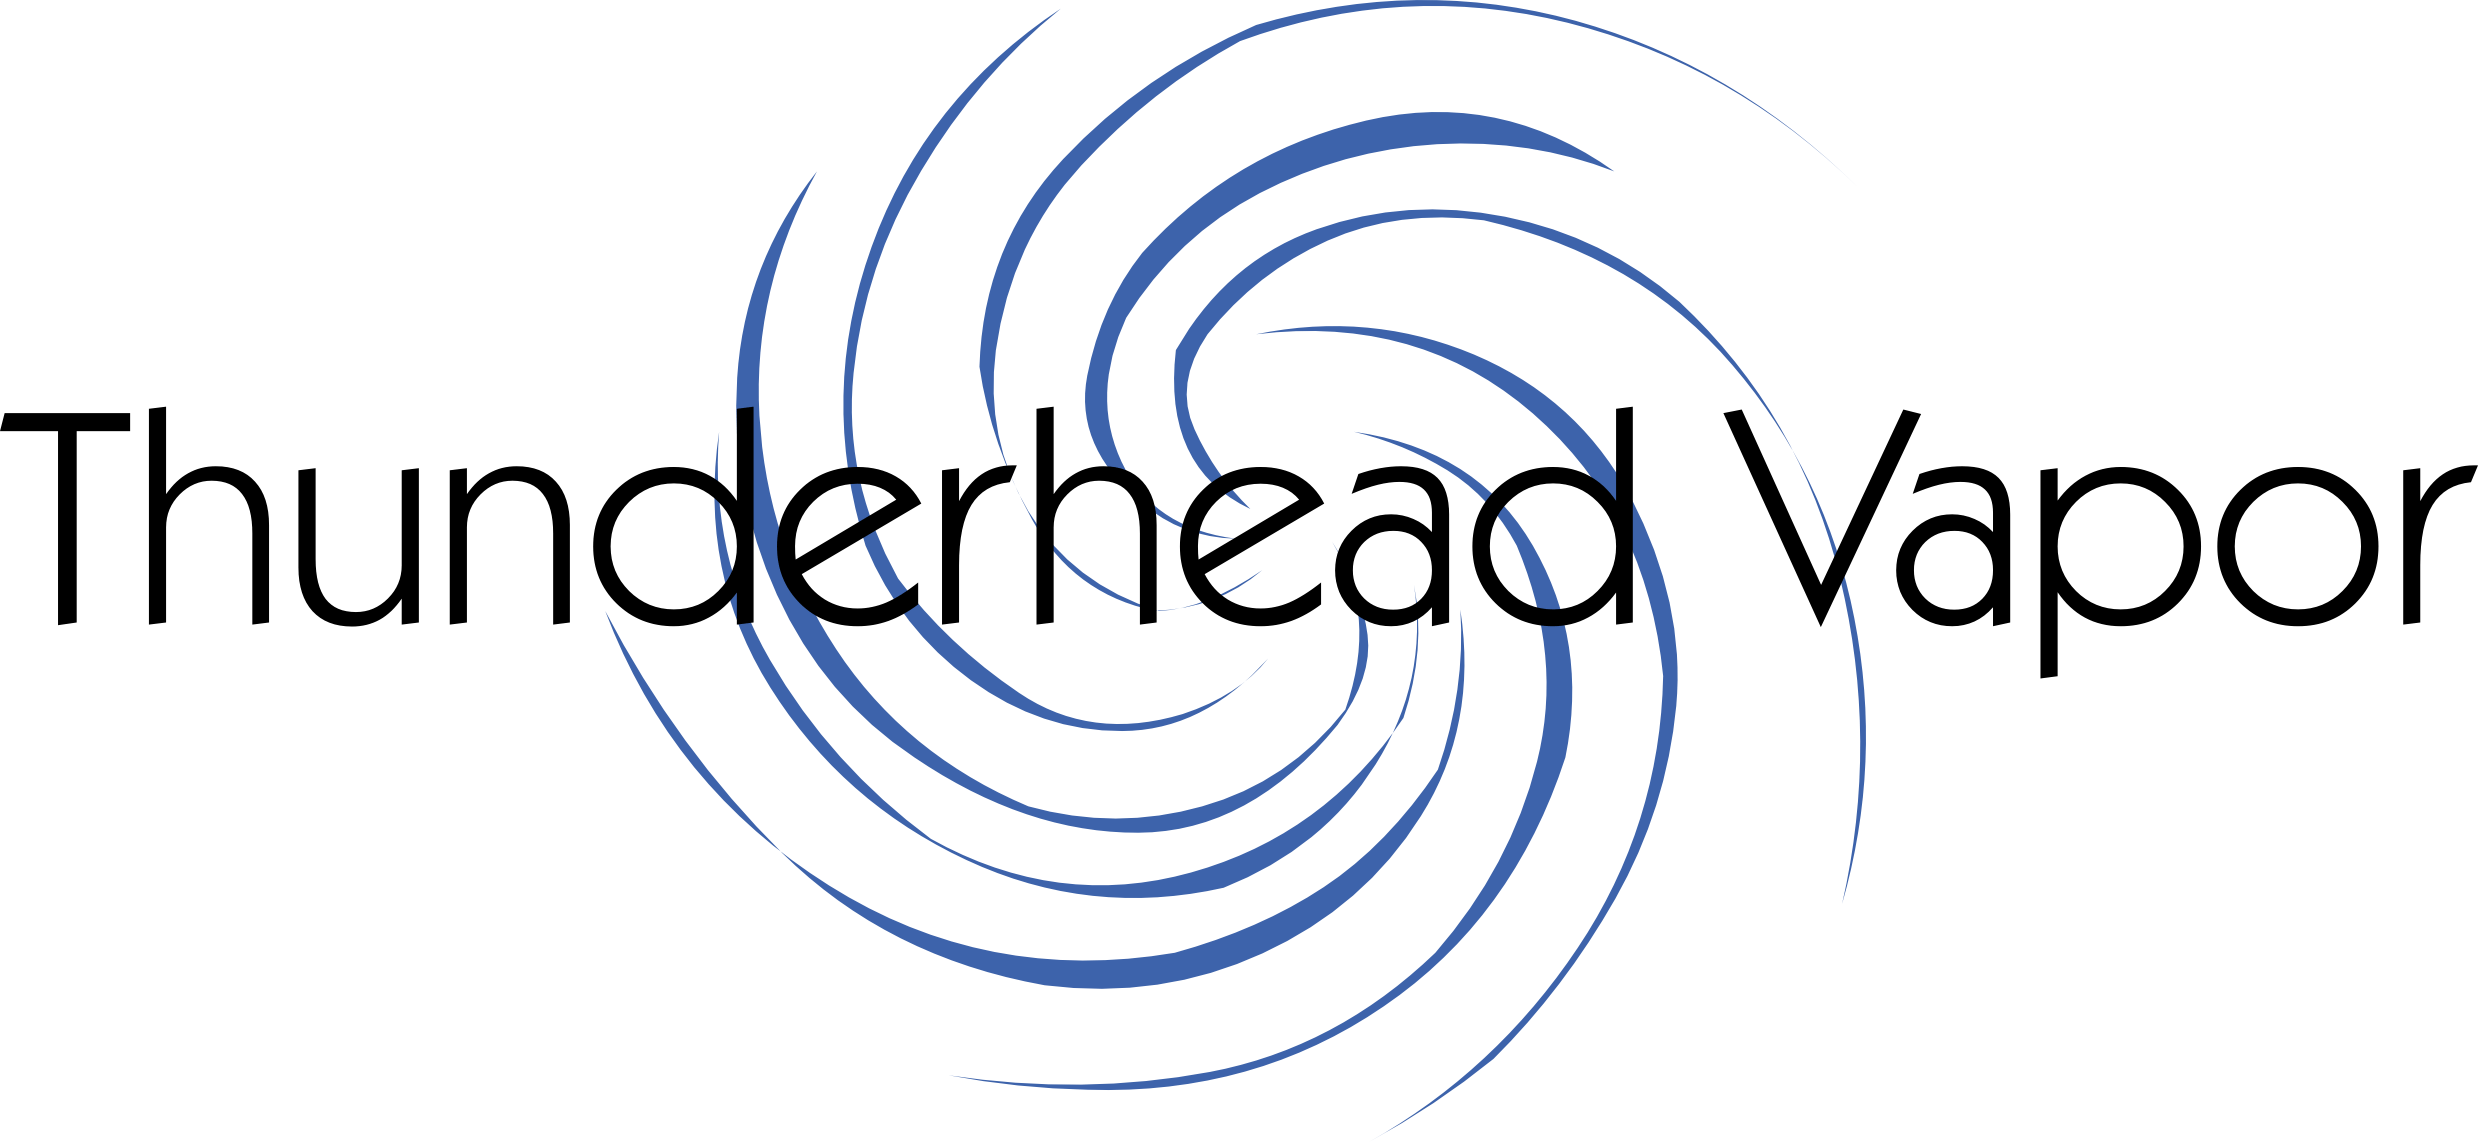 Thunderhead Logo - Thunderhead Vapor Loyalty Rewards Program